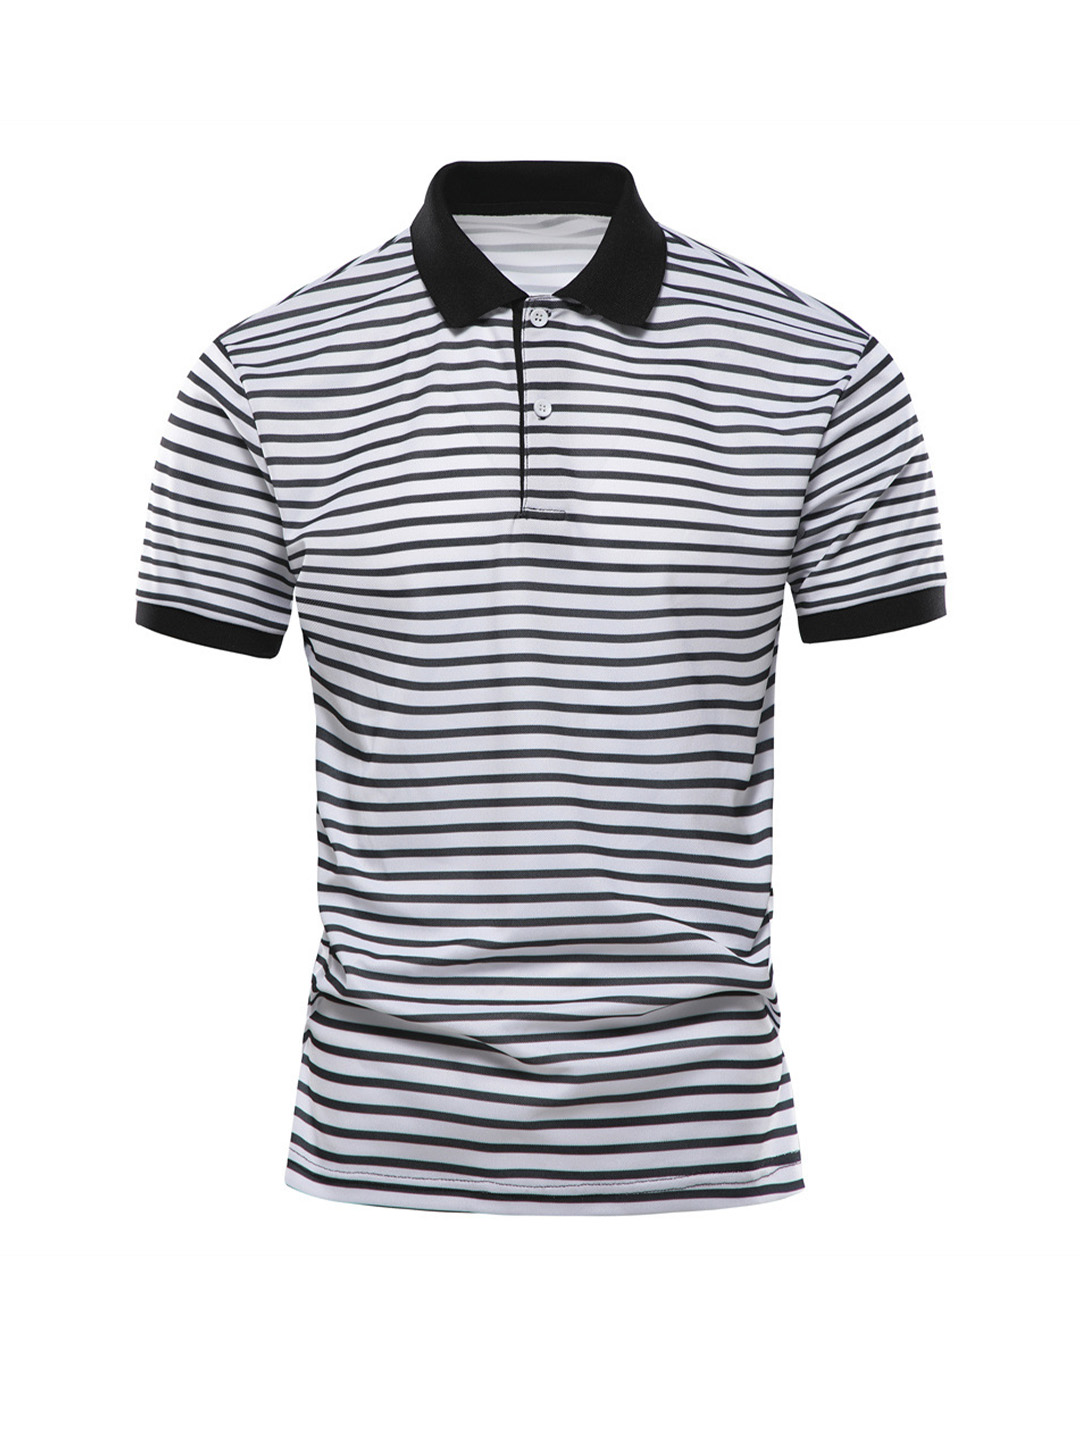 Joseph White Striped T-shirt-poisonstreetwear.com